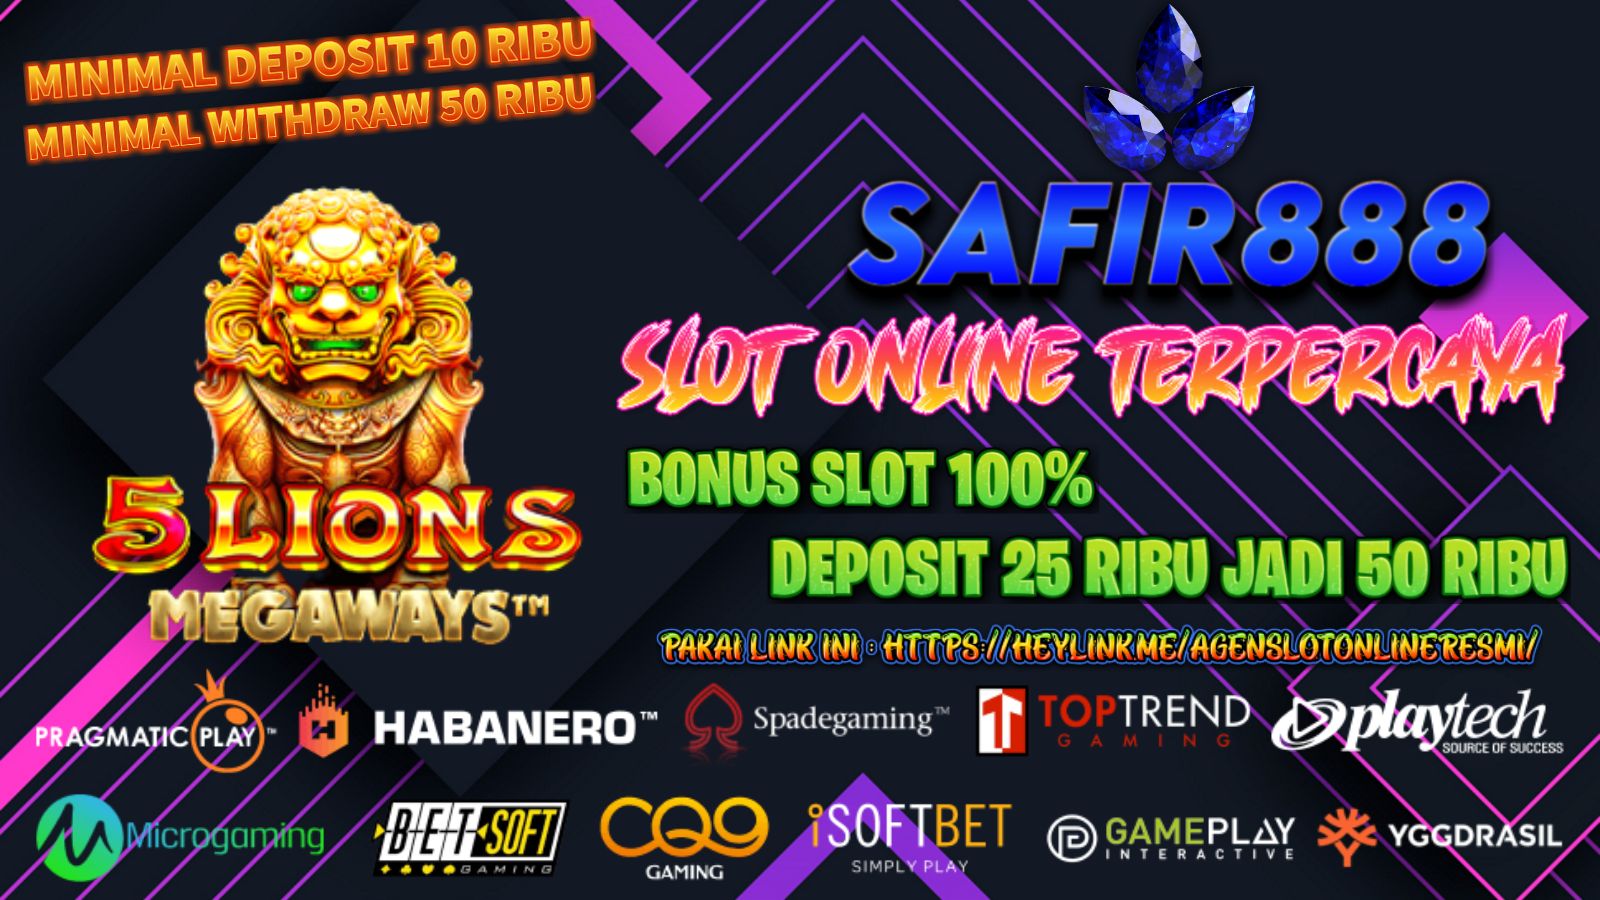 SAFIR888 - Slot Online Terpercaya